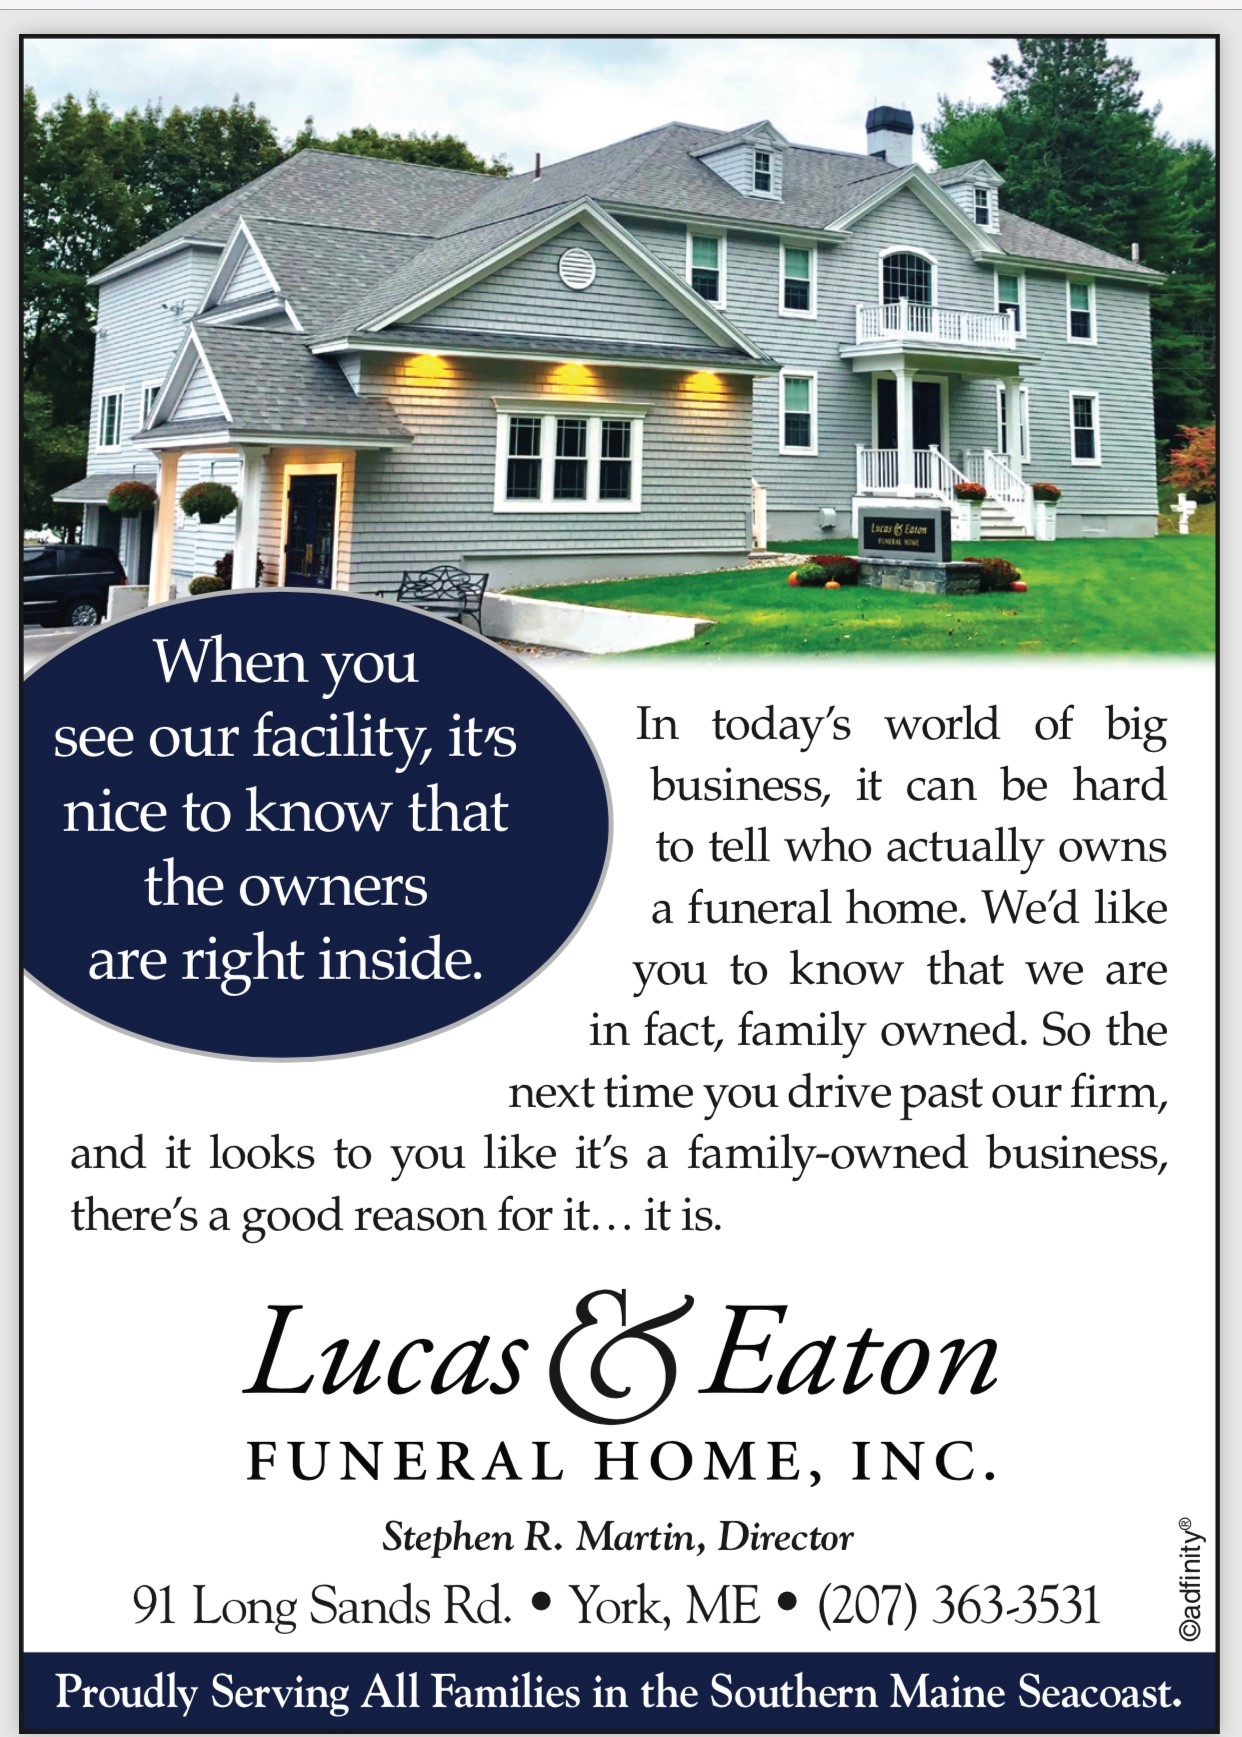 Lucas & Eaton Funeral Home 91 Long Sands Rd, York Maine 03909